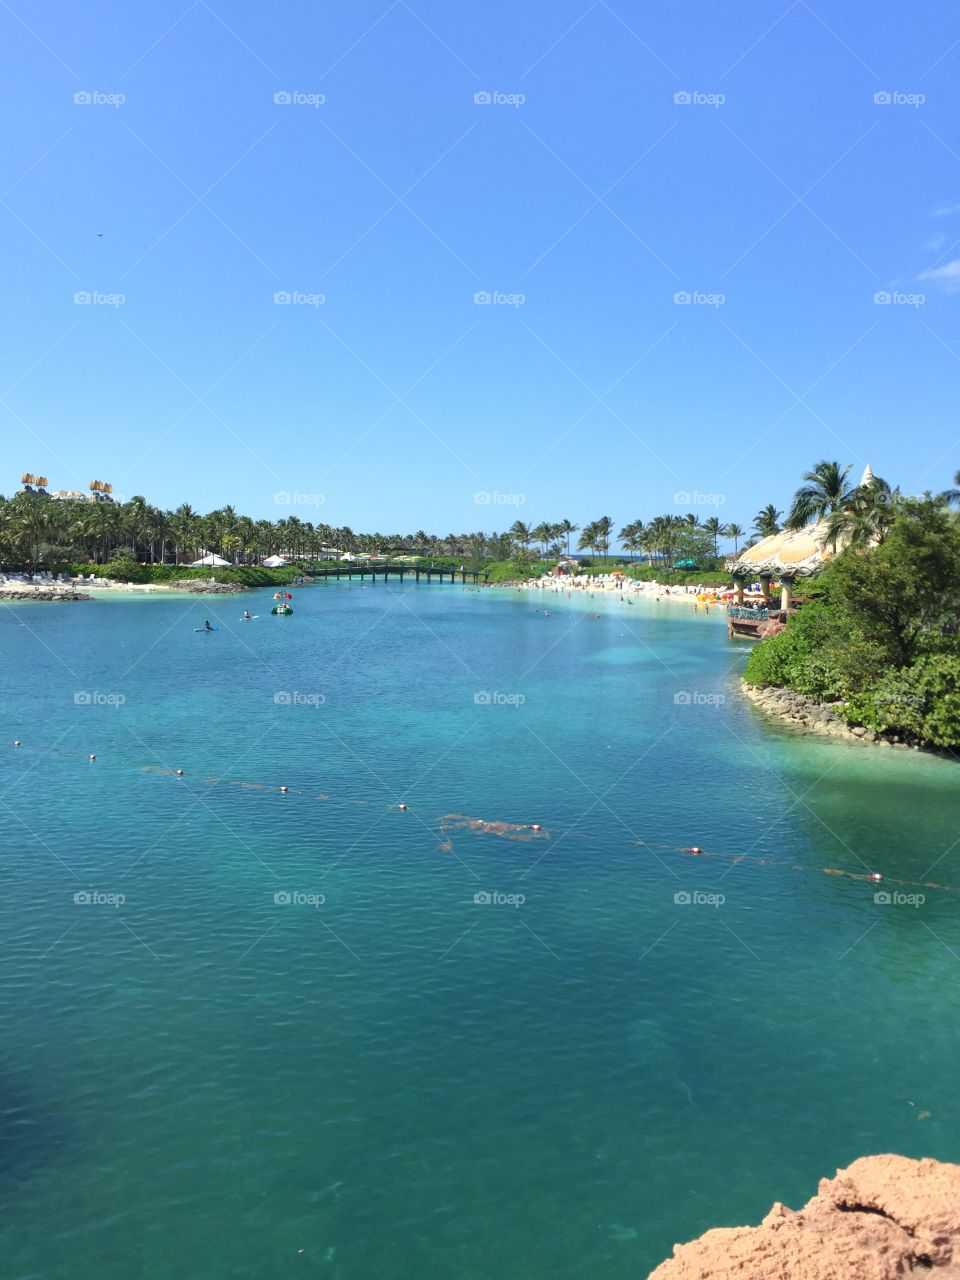 The Atlantis resort in the Bahamas